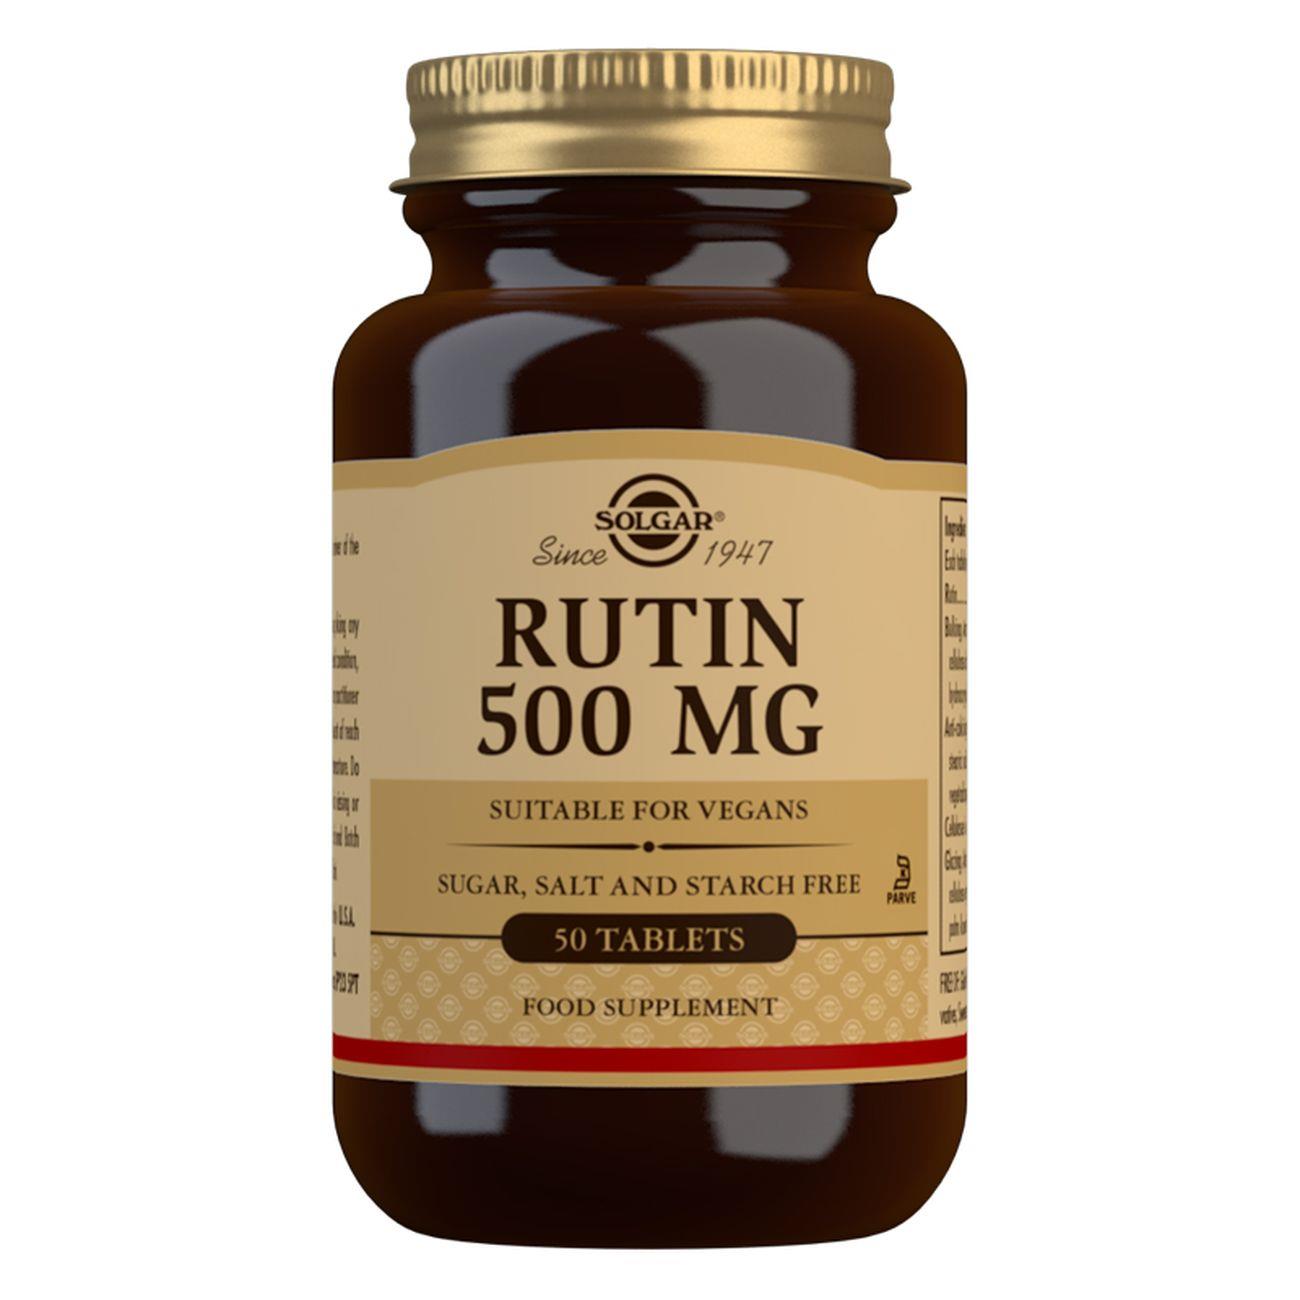 Rutin 500 mg - 50 Tablets